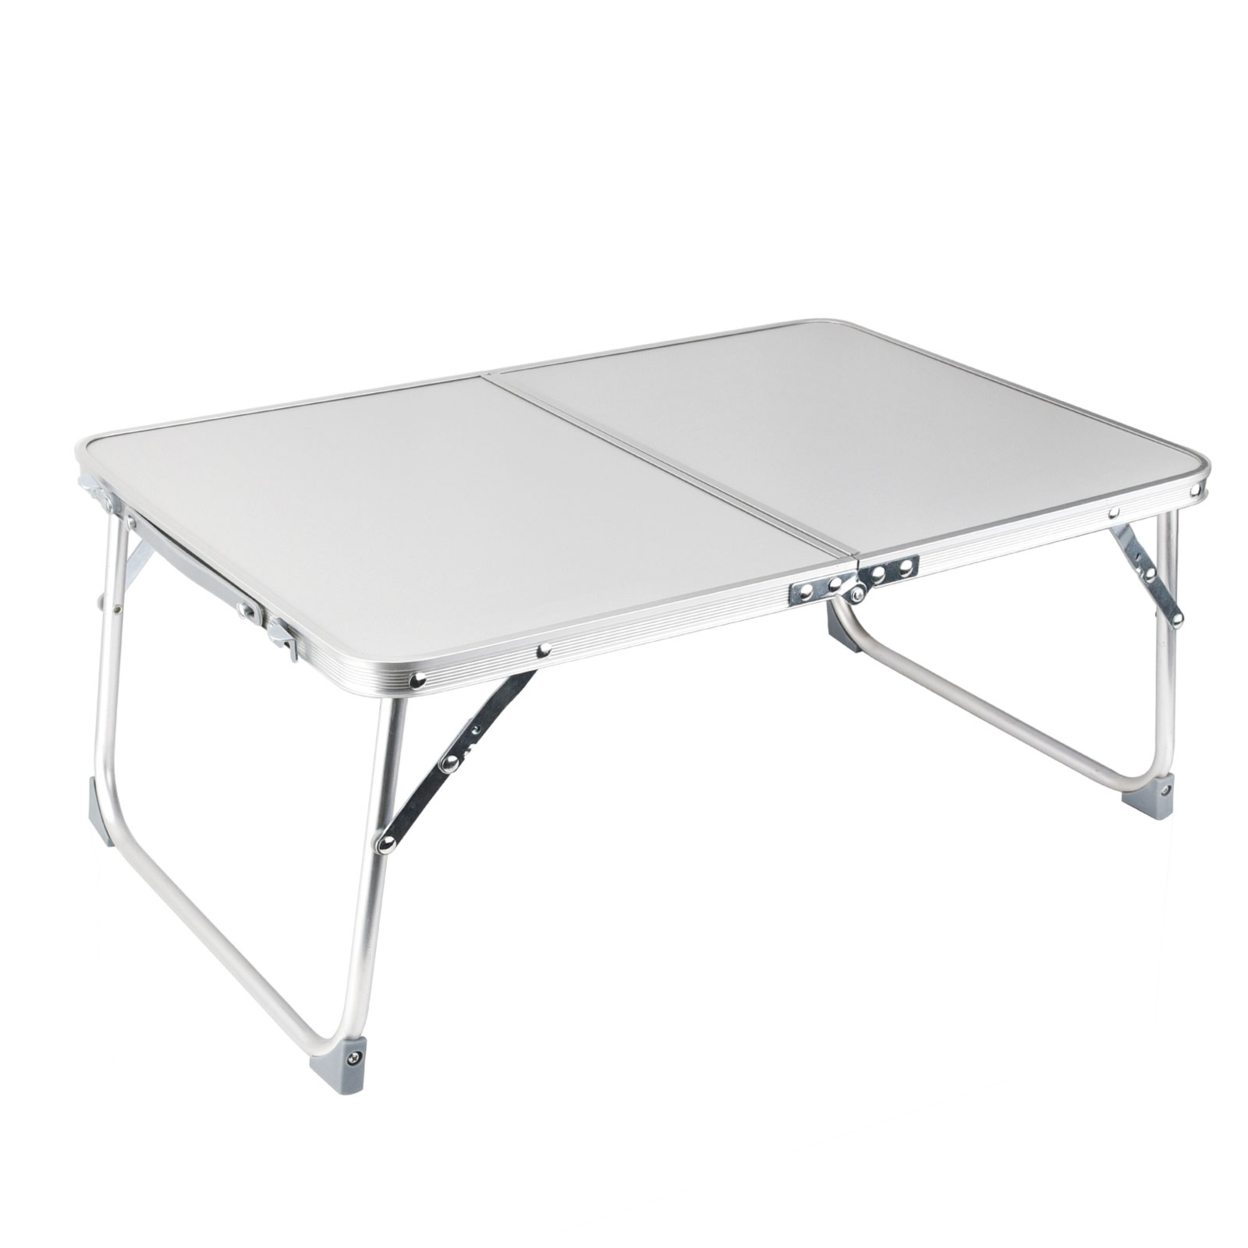 23.8 in. Foldable and Portable Mini Desk Tray - Silver